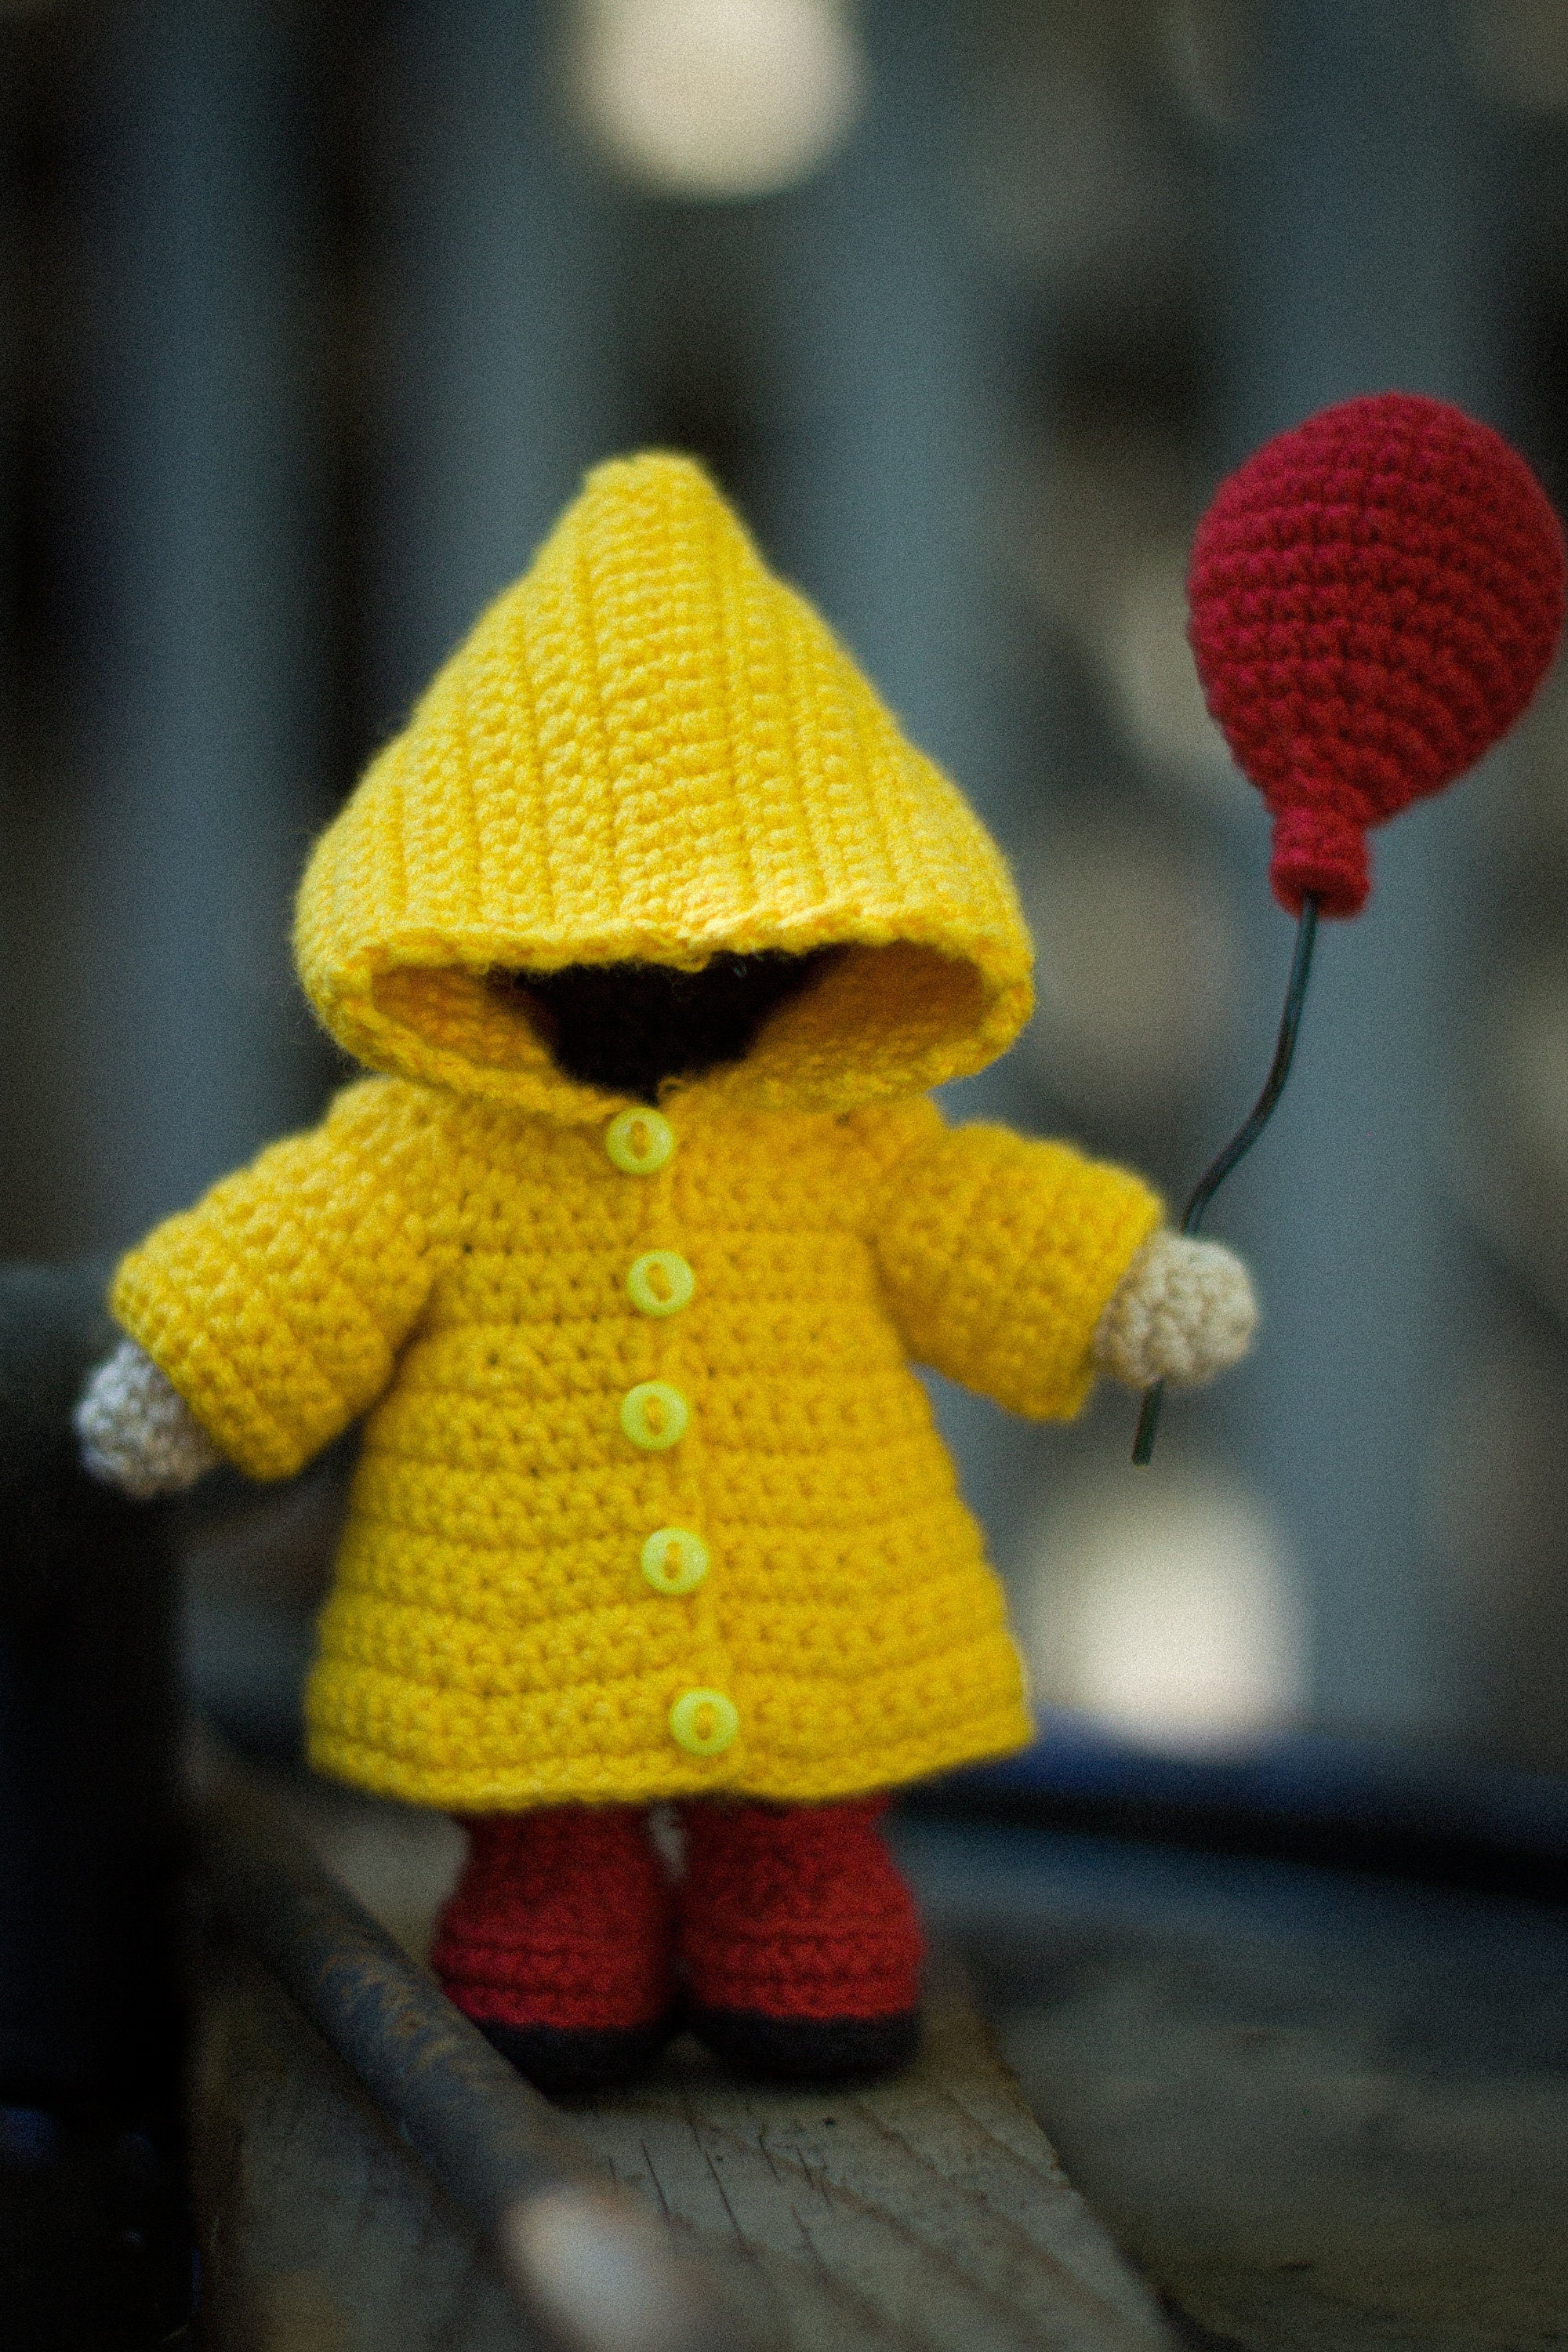 Crochet patterns amigurumi It in Raincoat with Balloon PDF / Instant Download tutorial